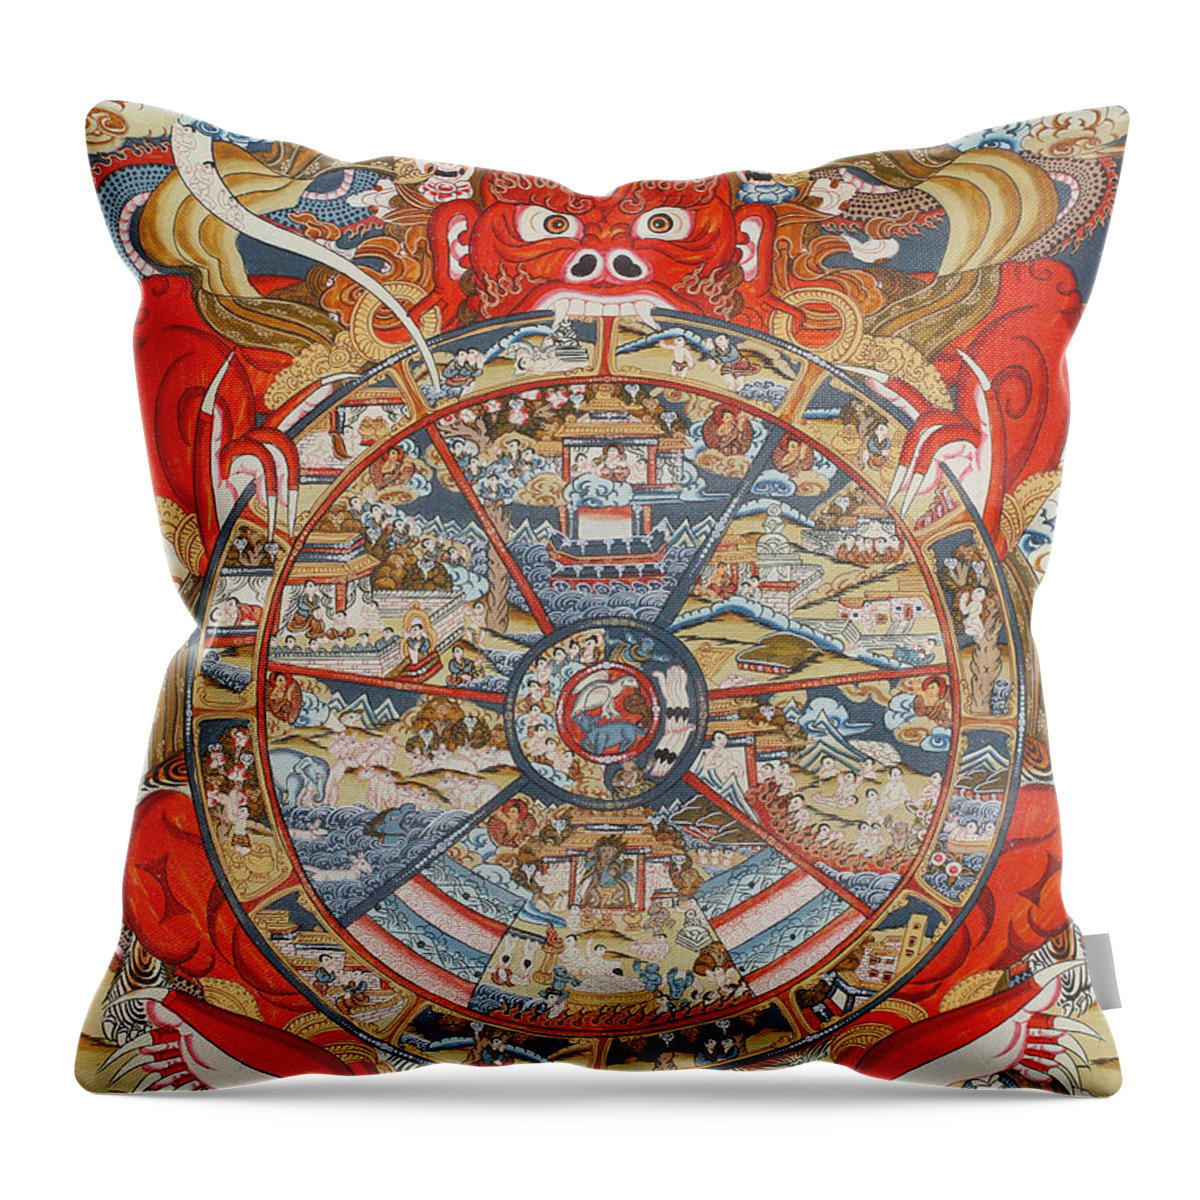 Wheel Of Life Or Wheel Of Samsara Throw Pillow featuring the painting Wheel of life or wheel of Samsara by Unknown